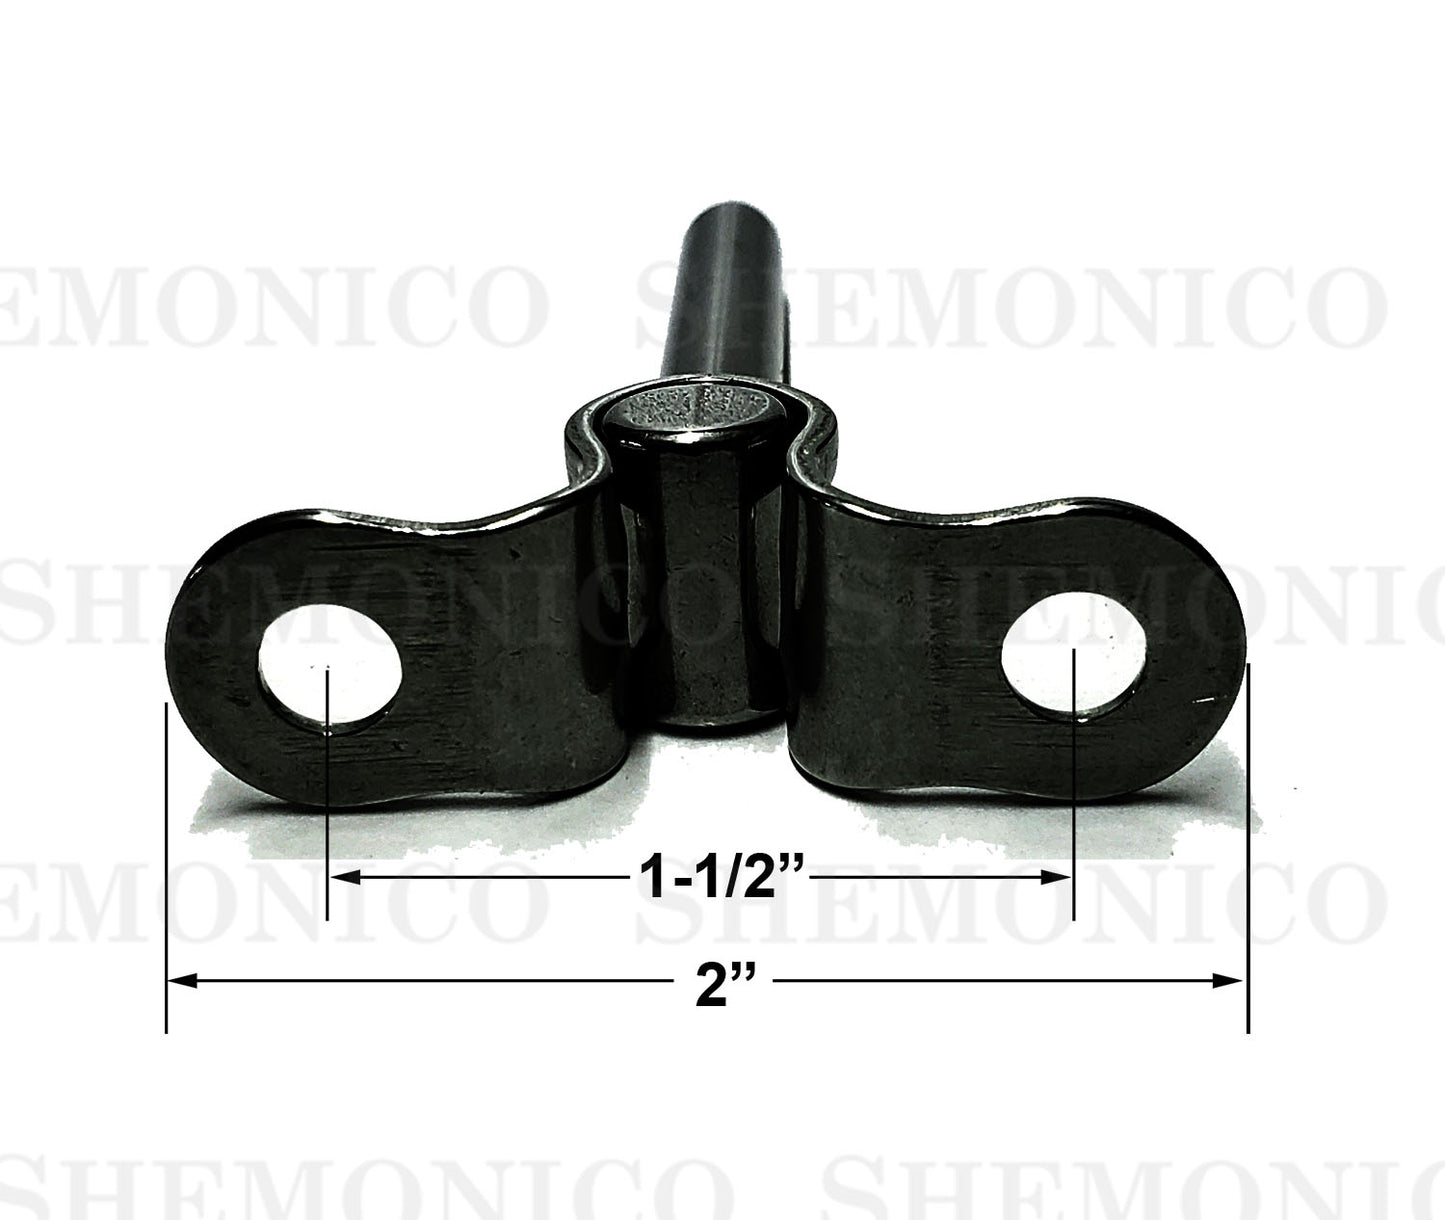 Black Oxide Steel Hand Swage Deck Toggle - Type 316 1/8" 3/16" (C1022-BO) - SHEMONICO